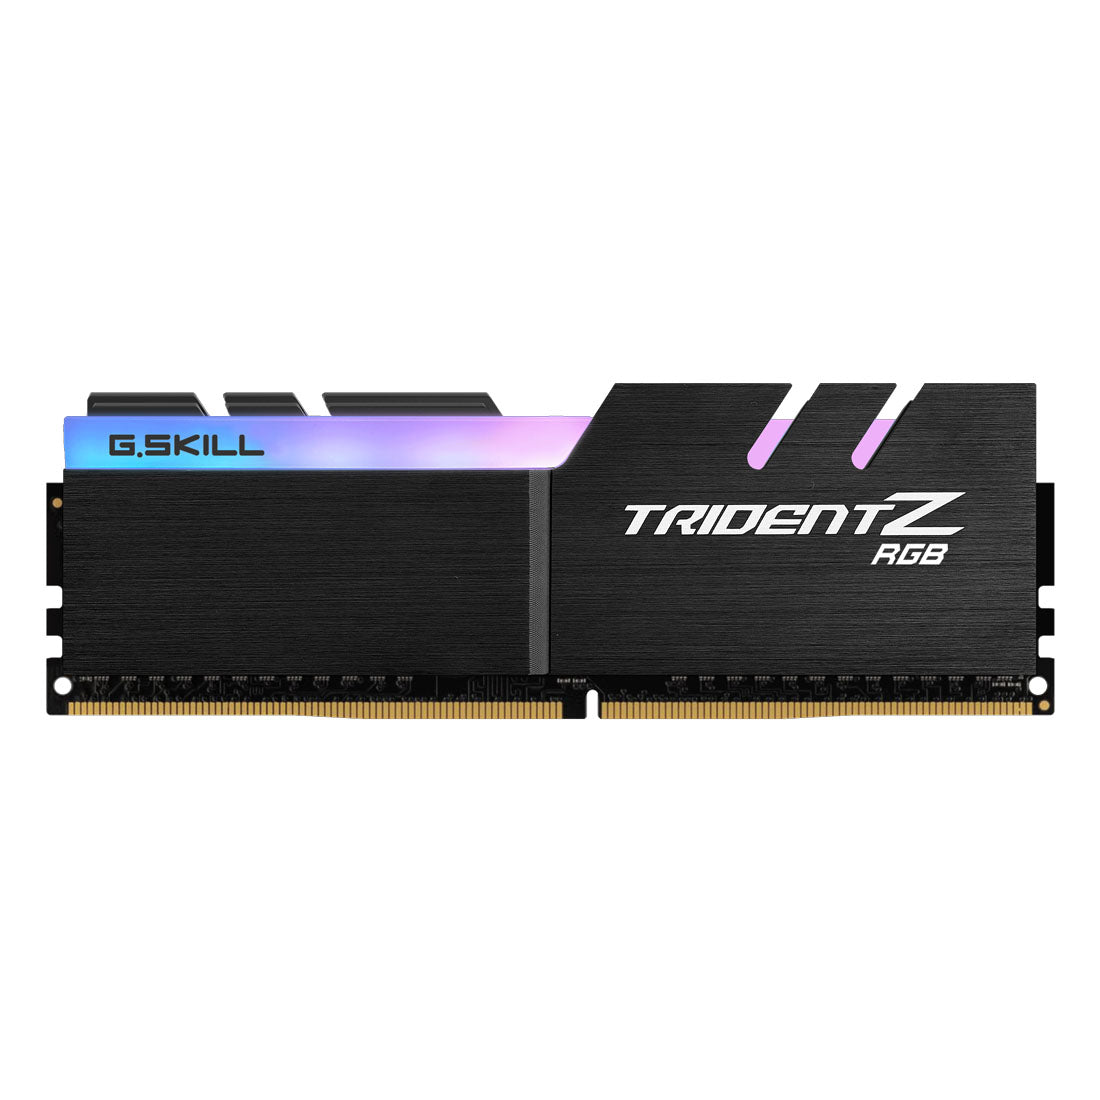 G.SKILL Trident Z RGB 8GB DDR4 RAM 3000MHz Desktop Memory